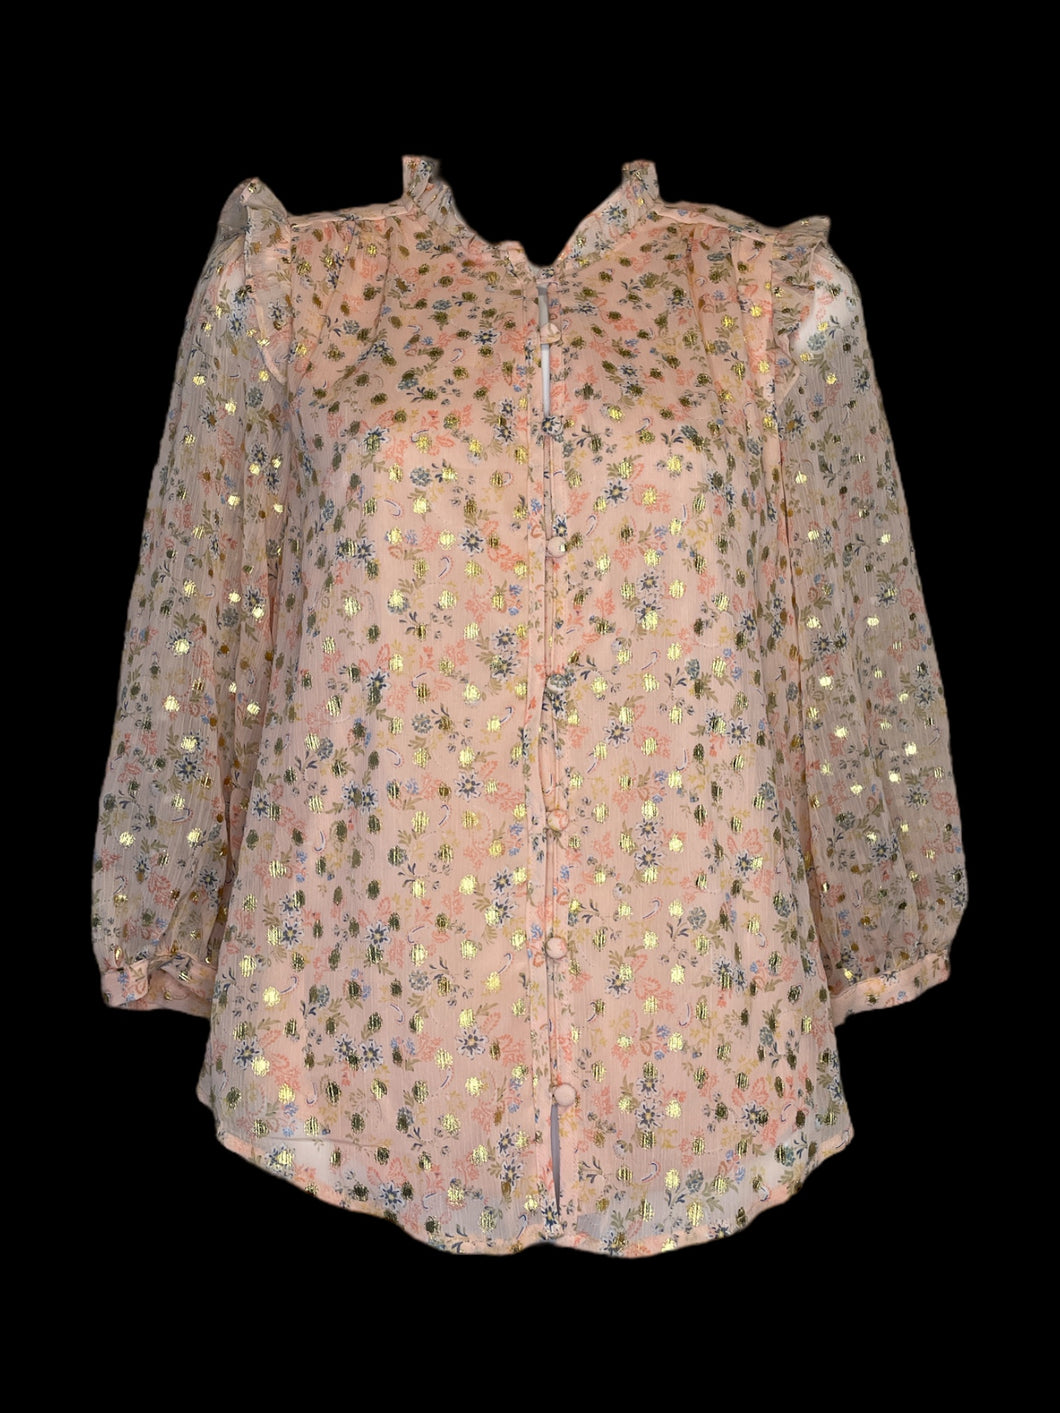 M NWT Light pink, gold, & blue sheer crepe fabric 3/4 sleeve high collar button up top w/ ruffle details, button cuffs, & round hem